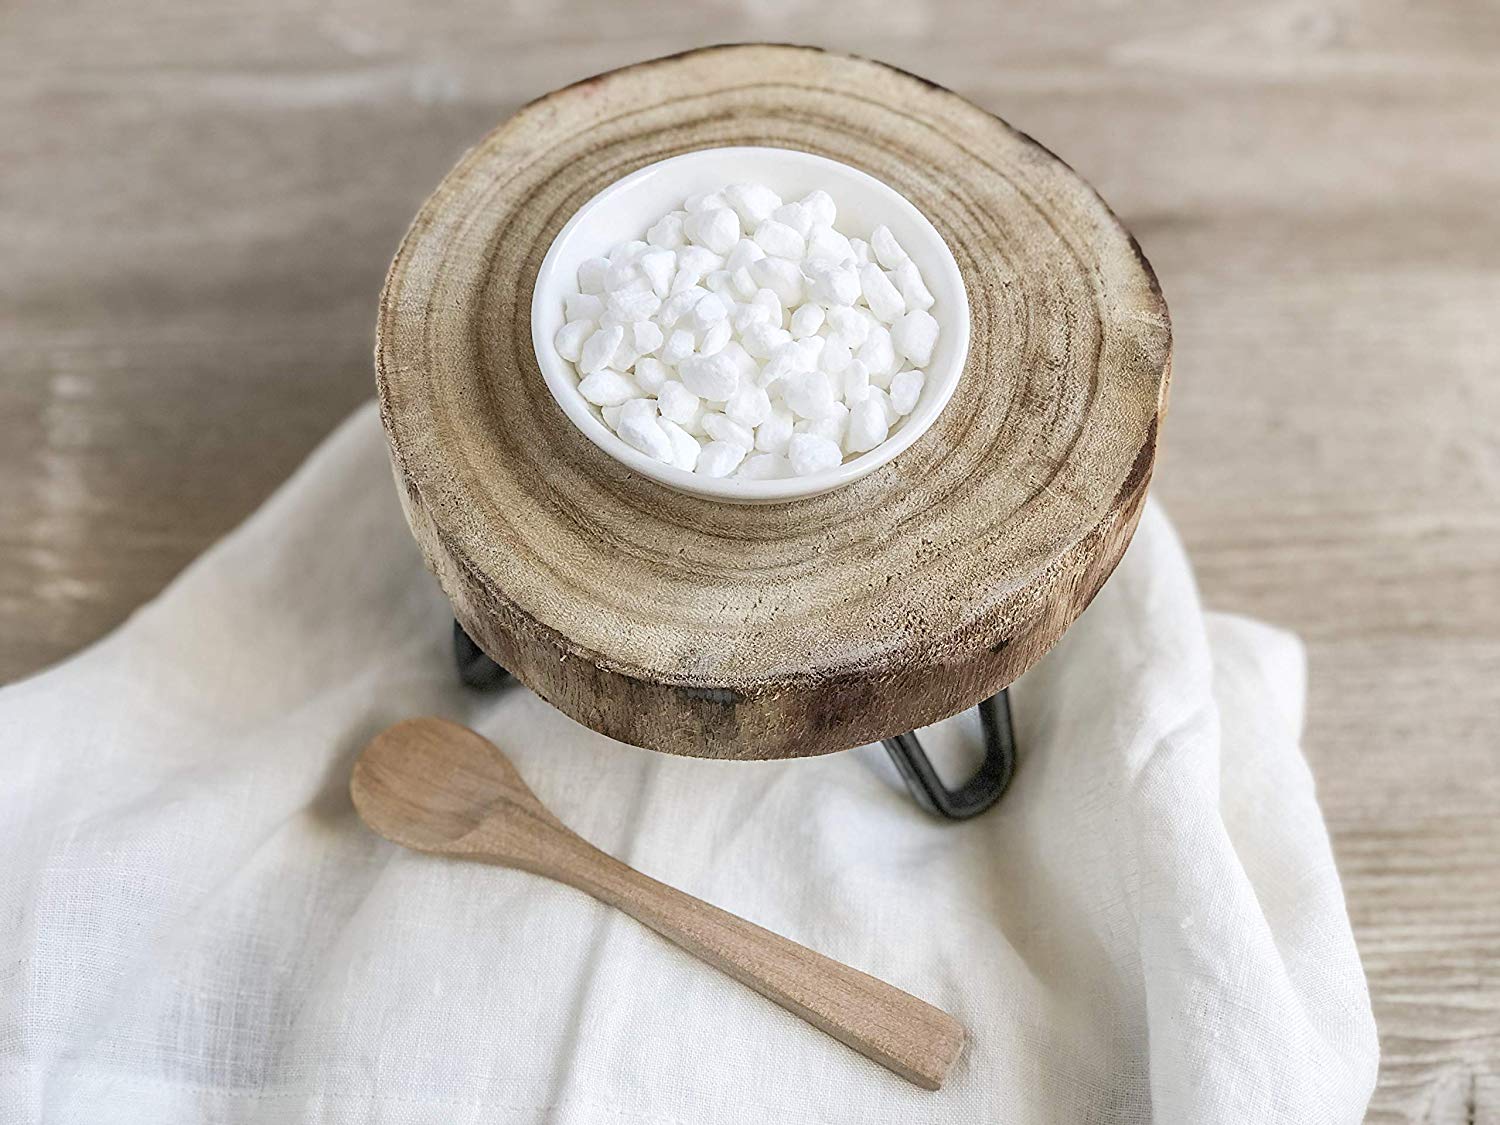 Organic Belgian Pearl Sugar: USDA Organic, Batch Tested & Verified Gluten Free, Medium Sized Pearls